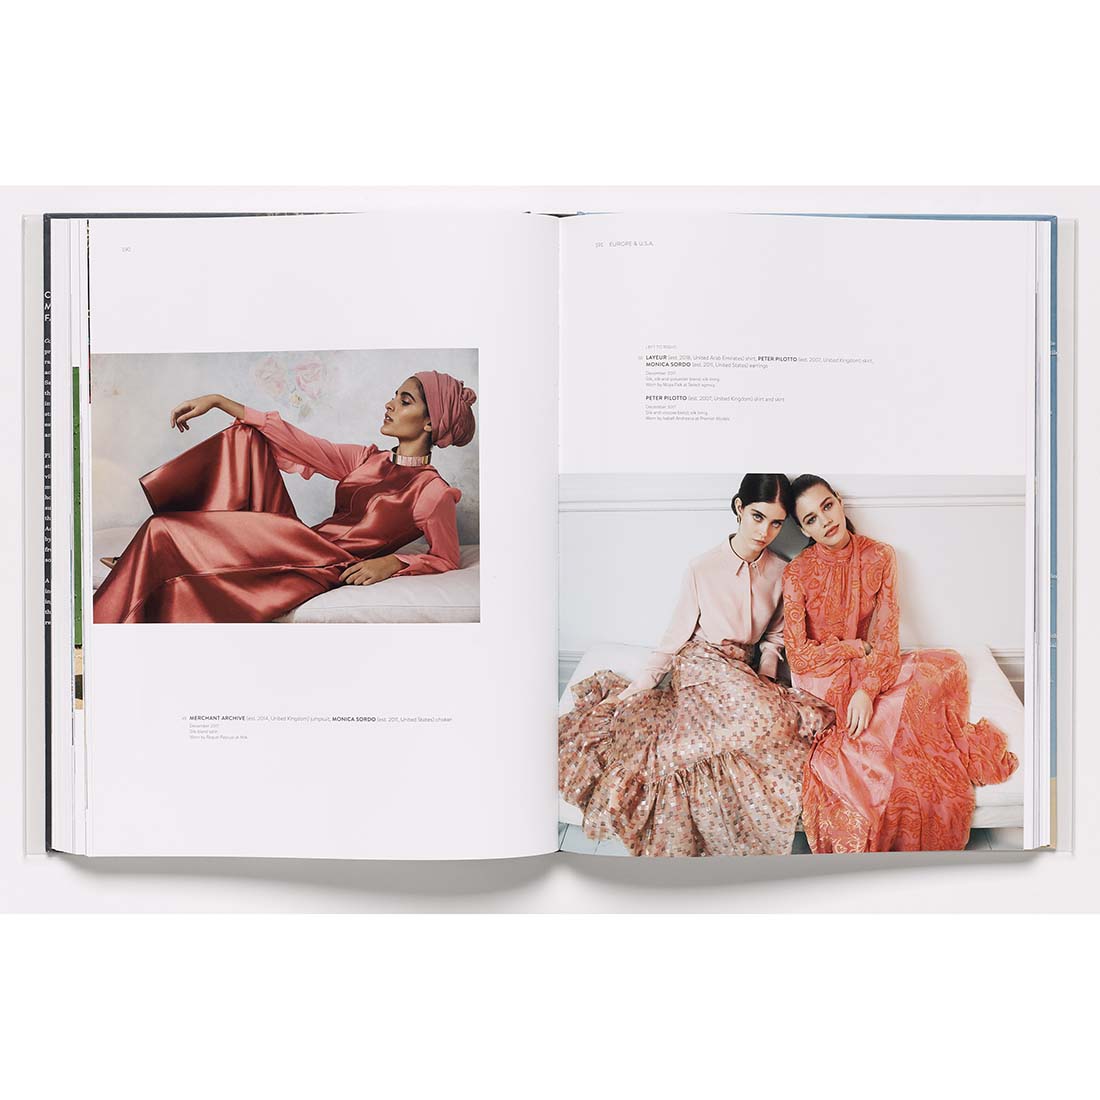 Contemporary Muslim Fashions (Hardcover)